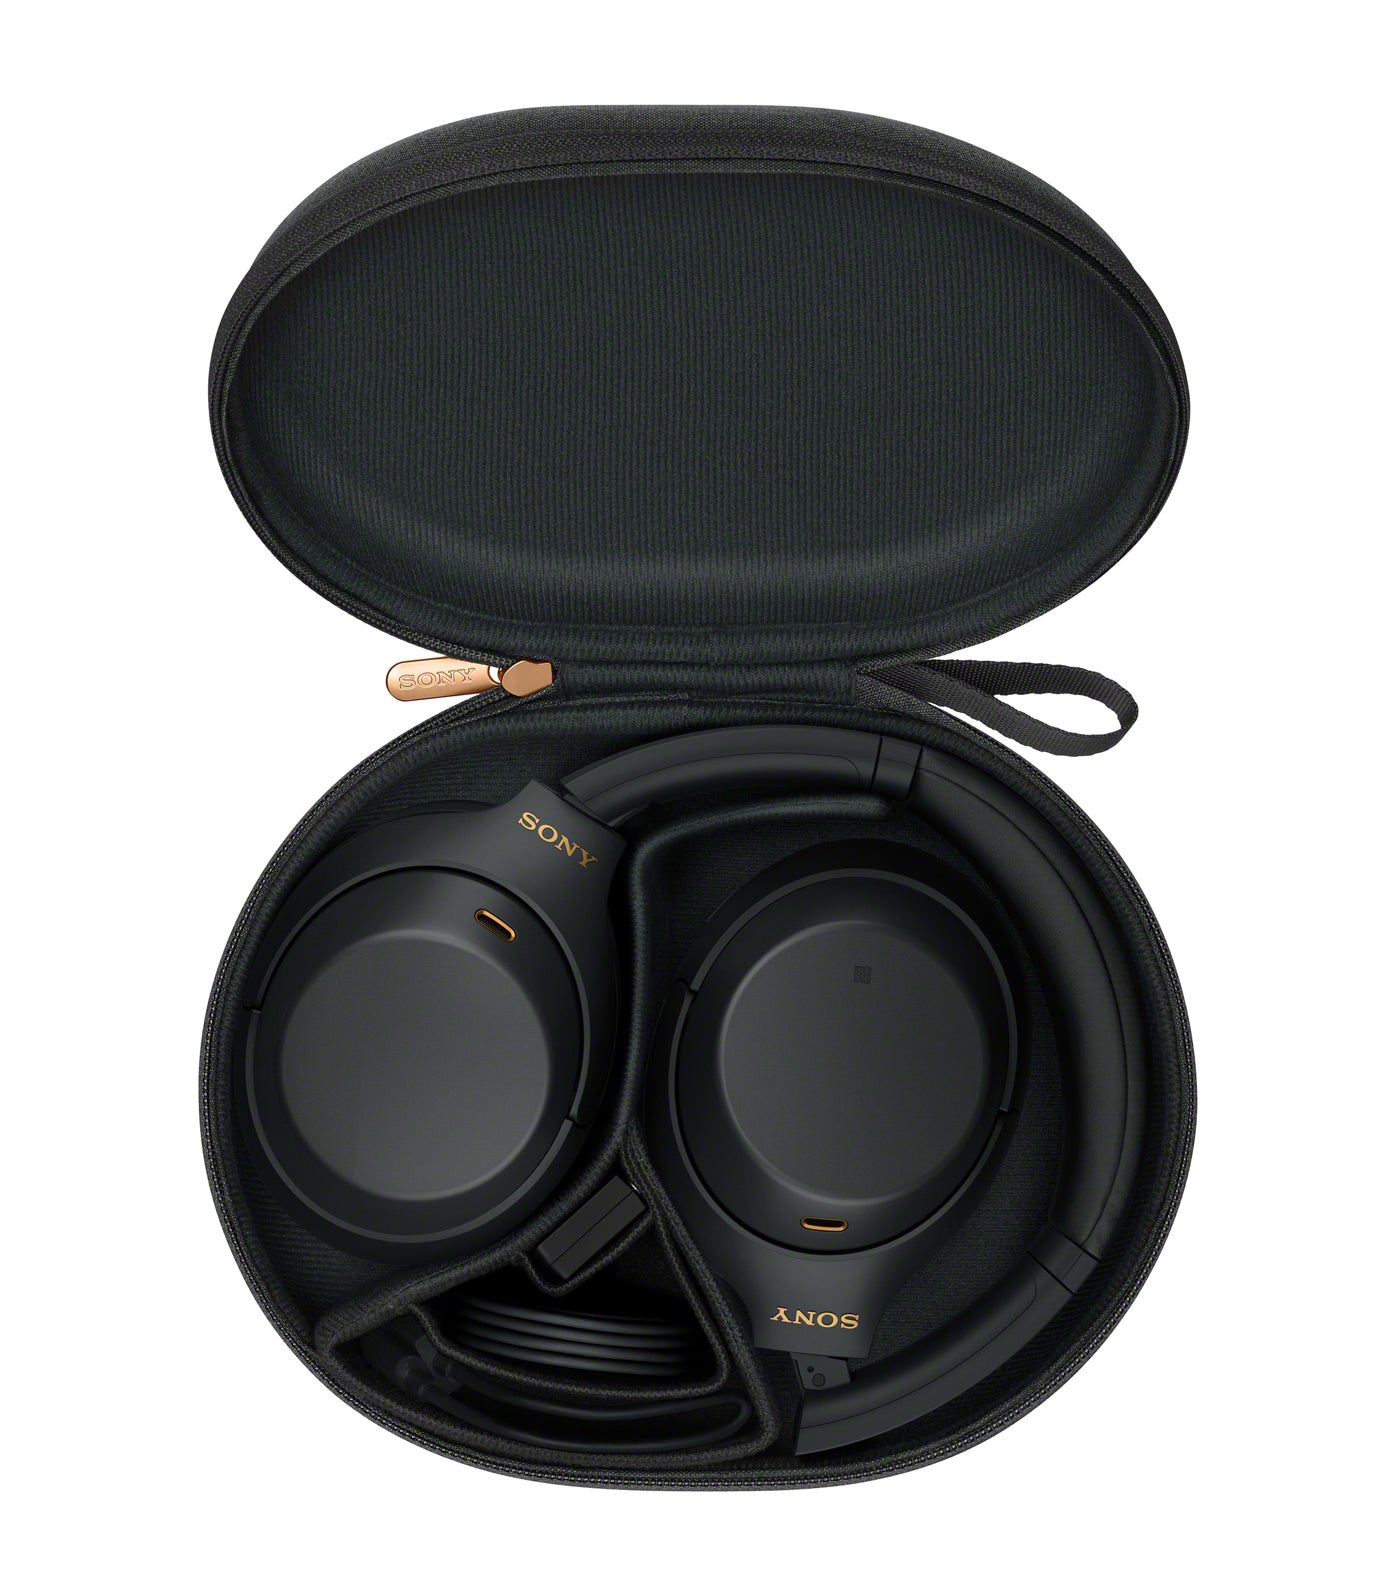 WH-1000XM4 Wireless Noise-Canceling Headphones Black